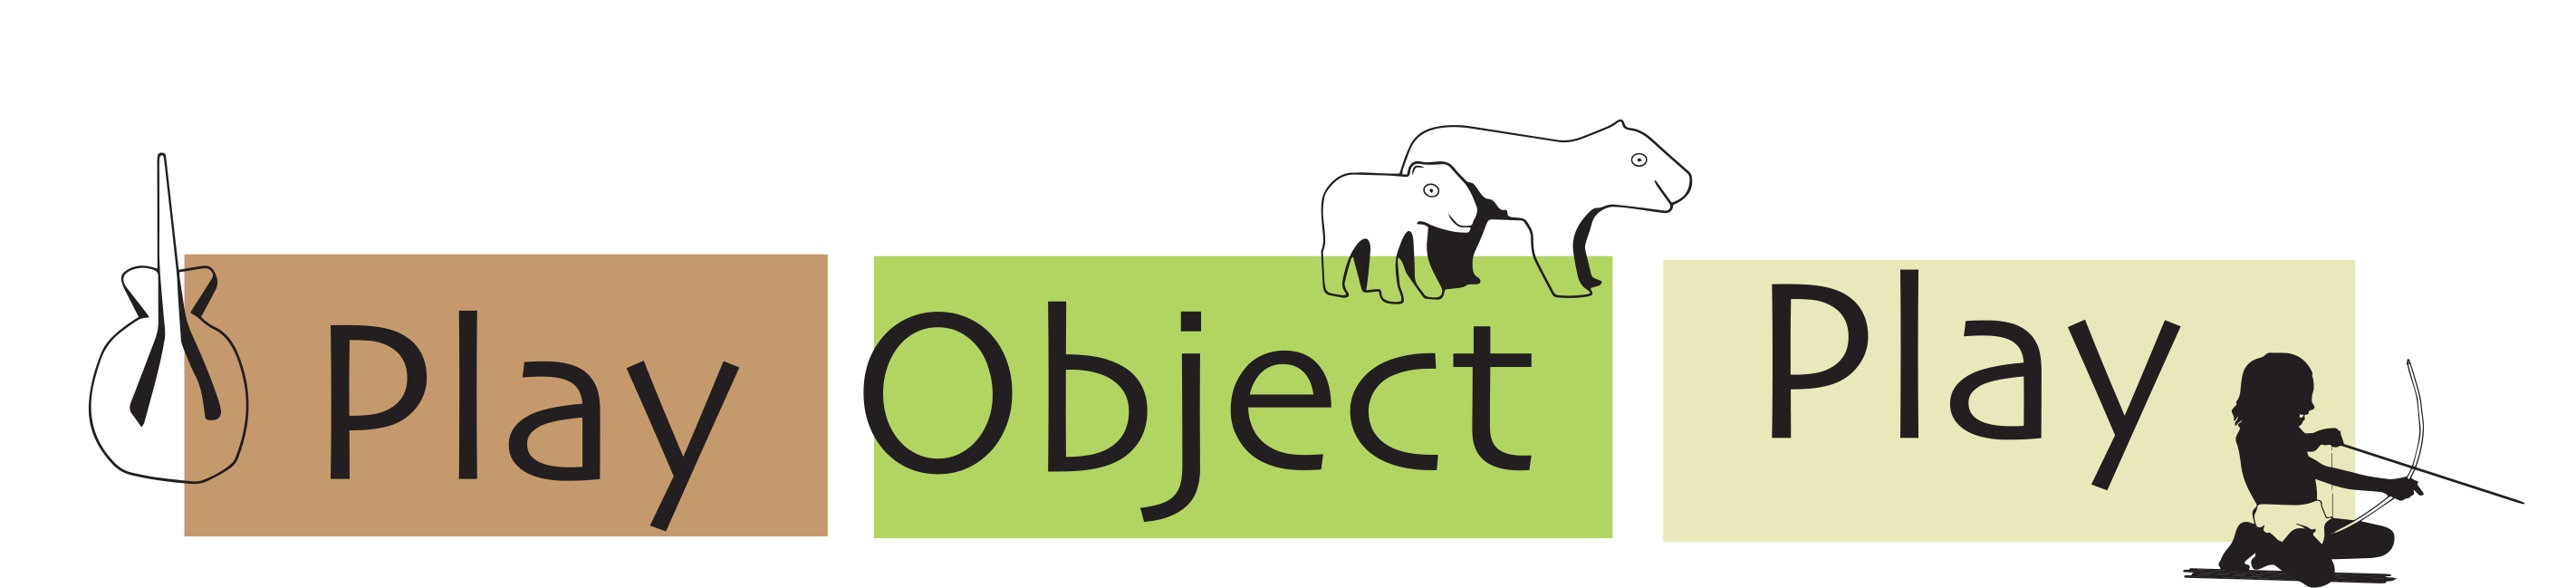 Play Object Play logo